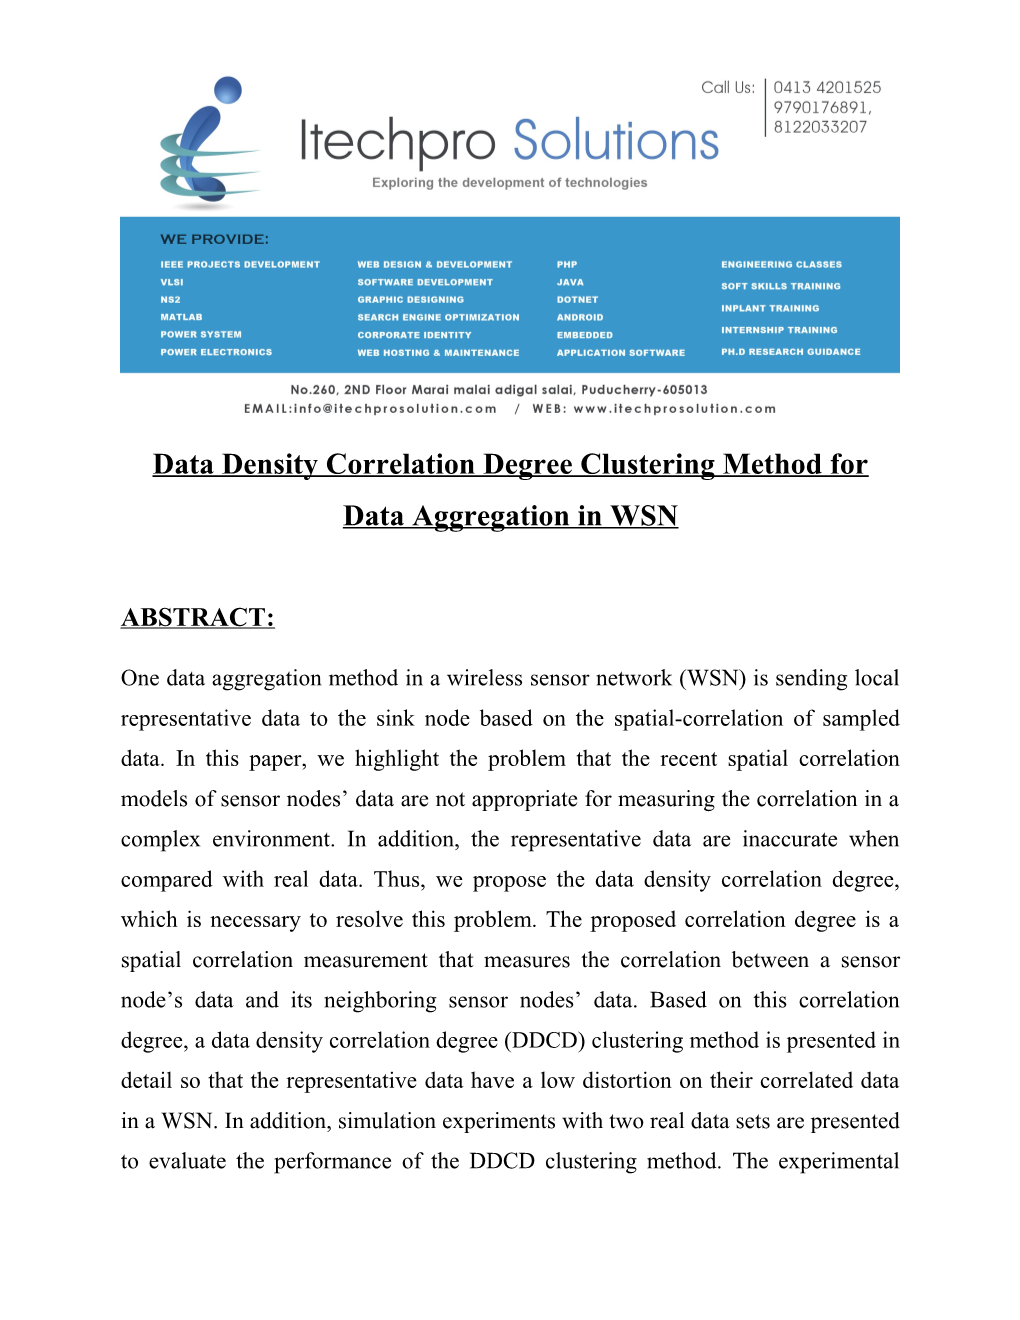 Data Density Correlation Degree Clustering Method for Data Aggregation in WSN